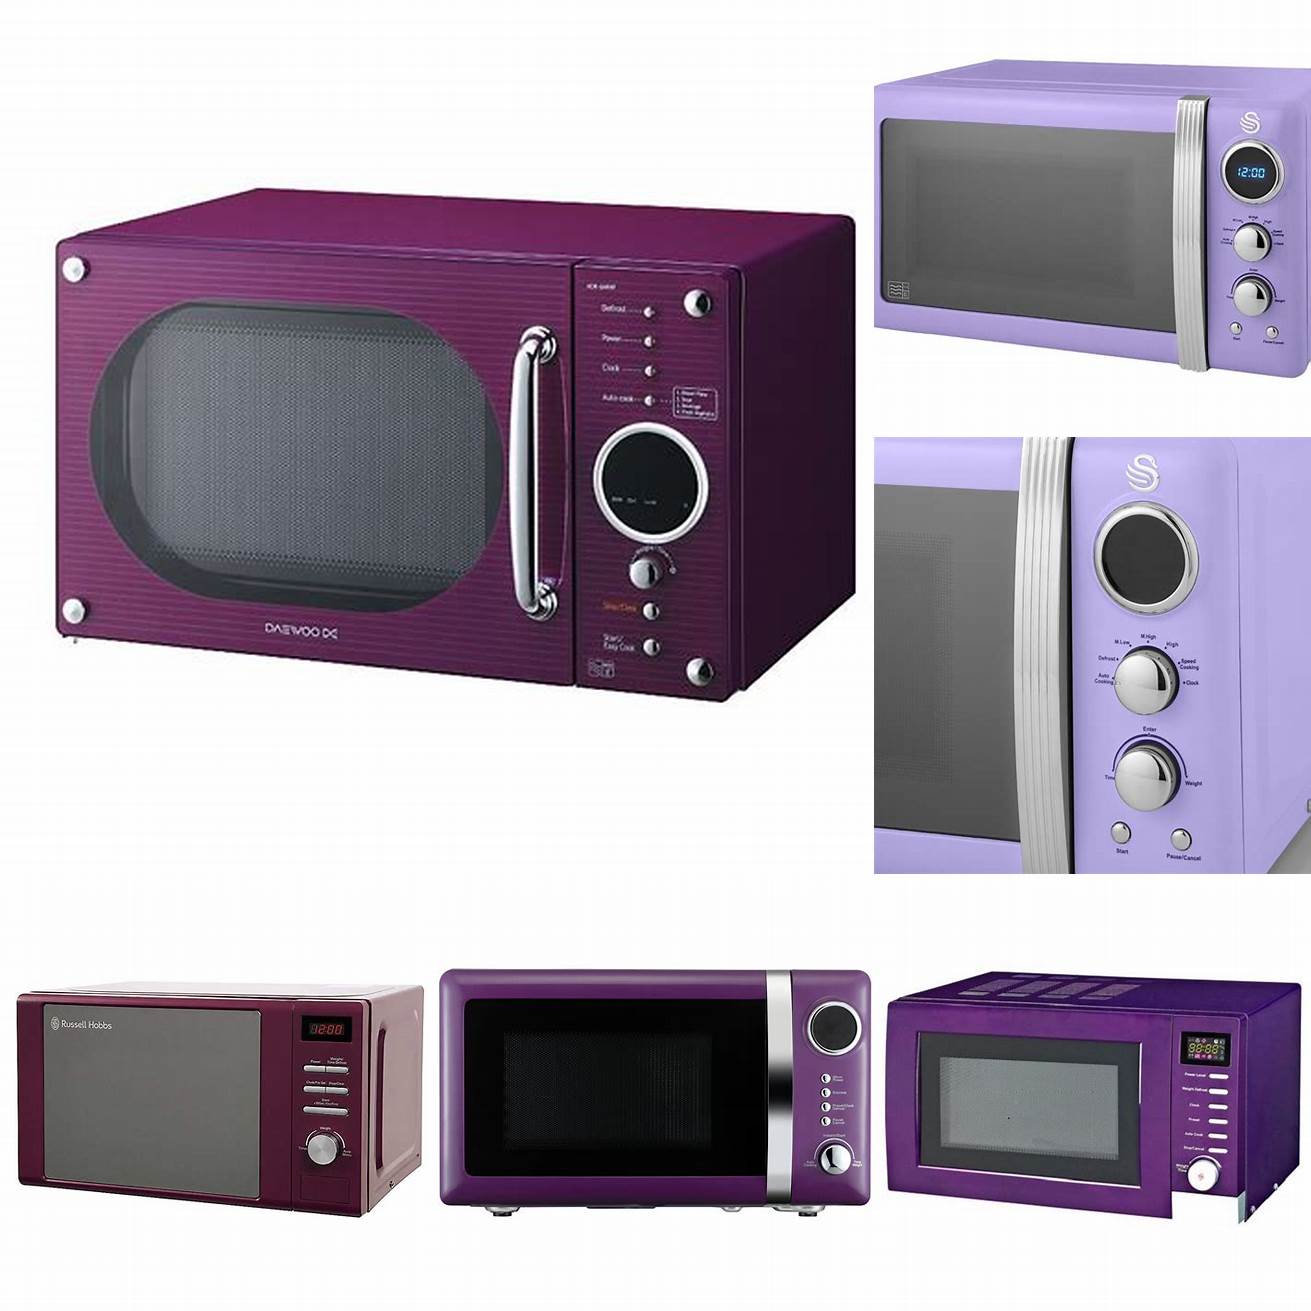 A purple microwave